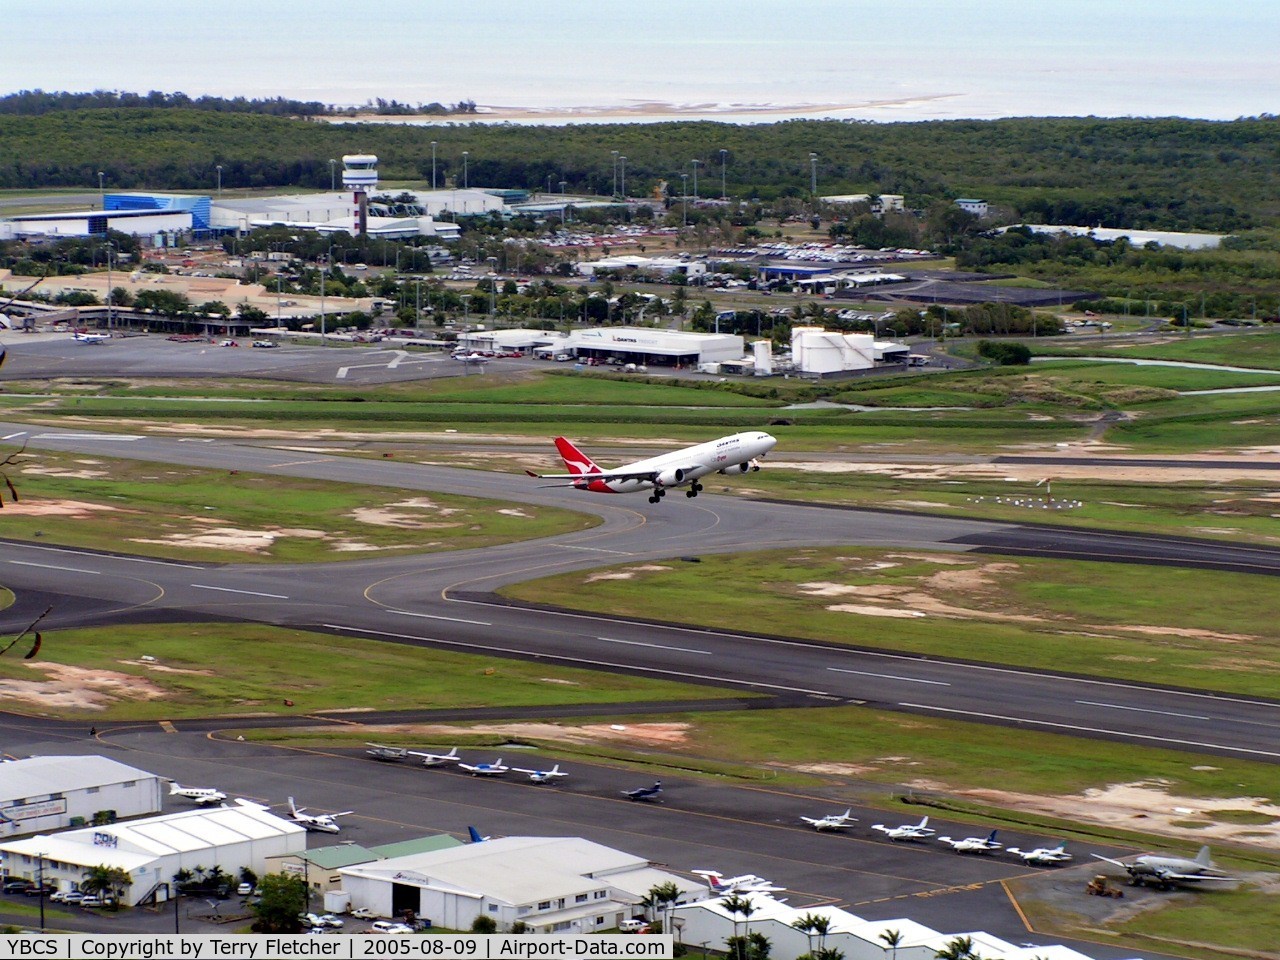 Cairns International Airport, Cairns, Queensland Australia (YBCS) - View from the adjacent Mountain park